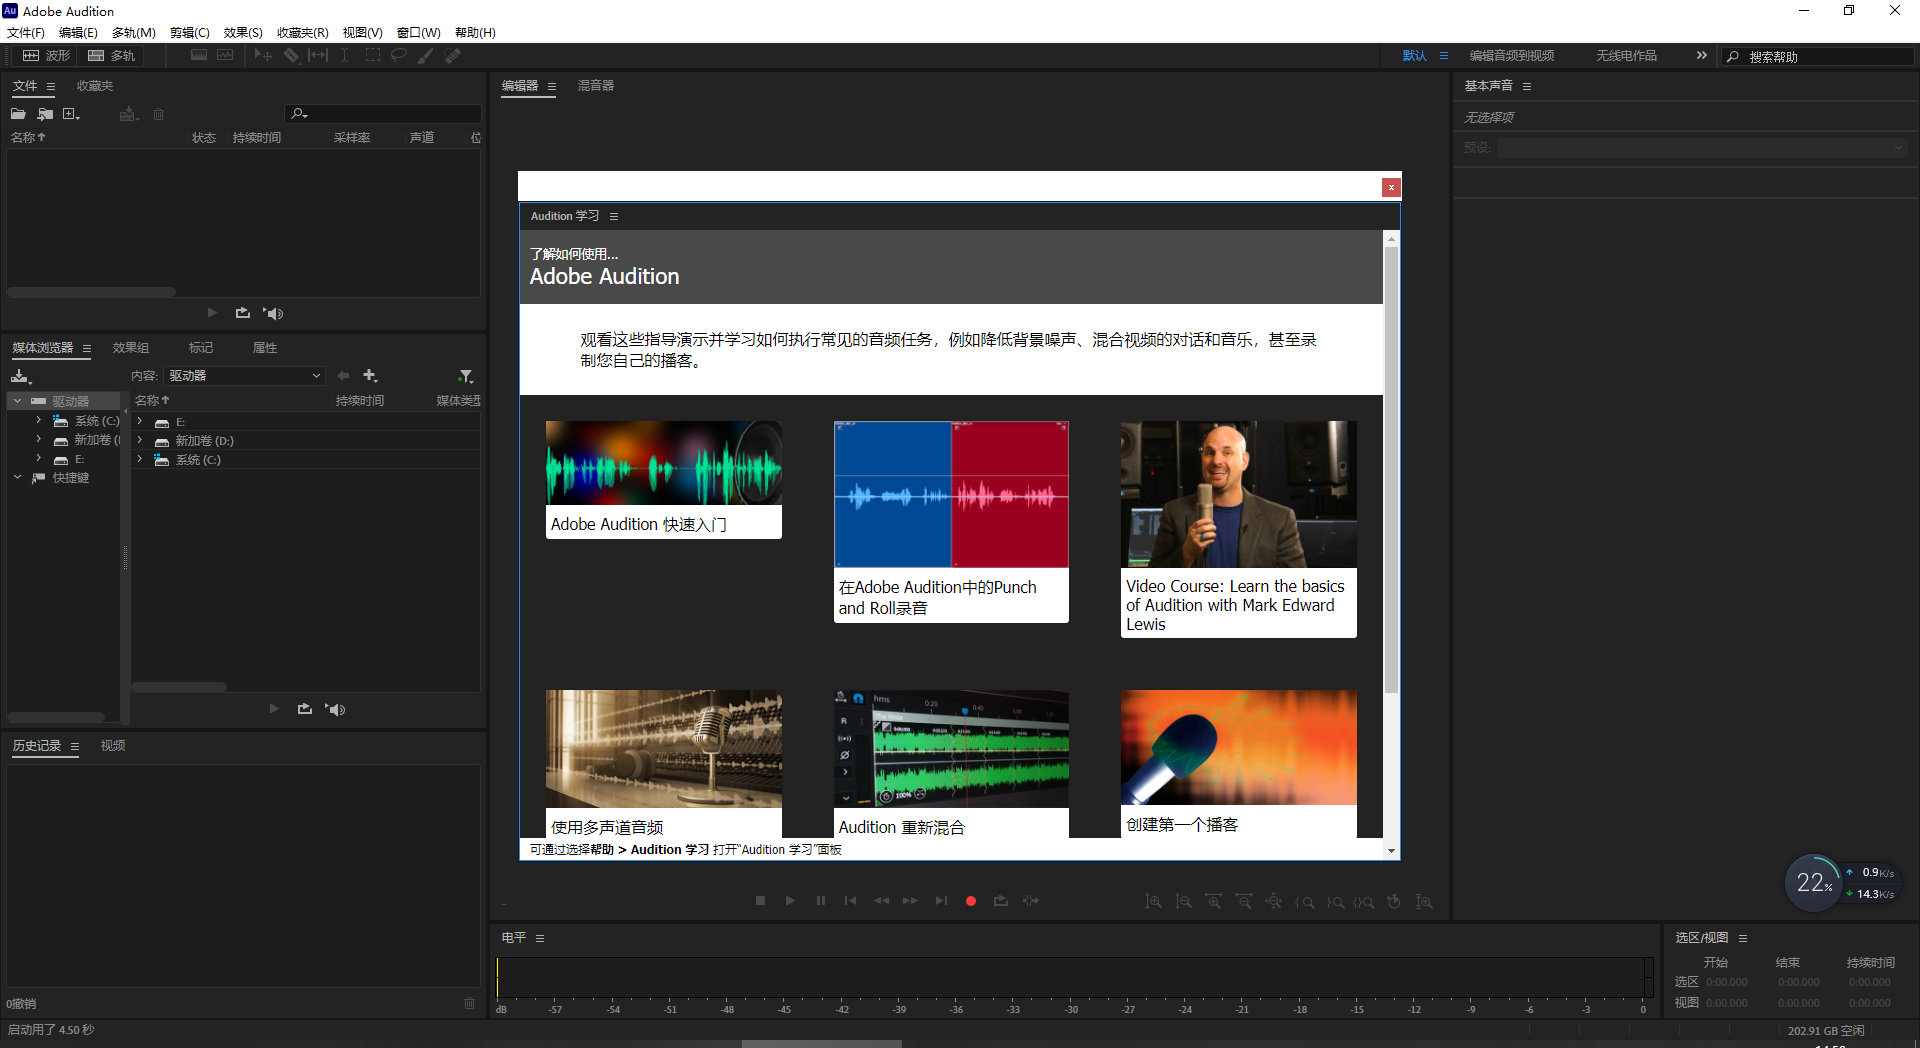 Adobe Audition 2023 v23.6.1.3 instal the new version for windows